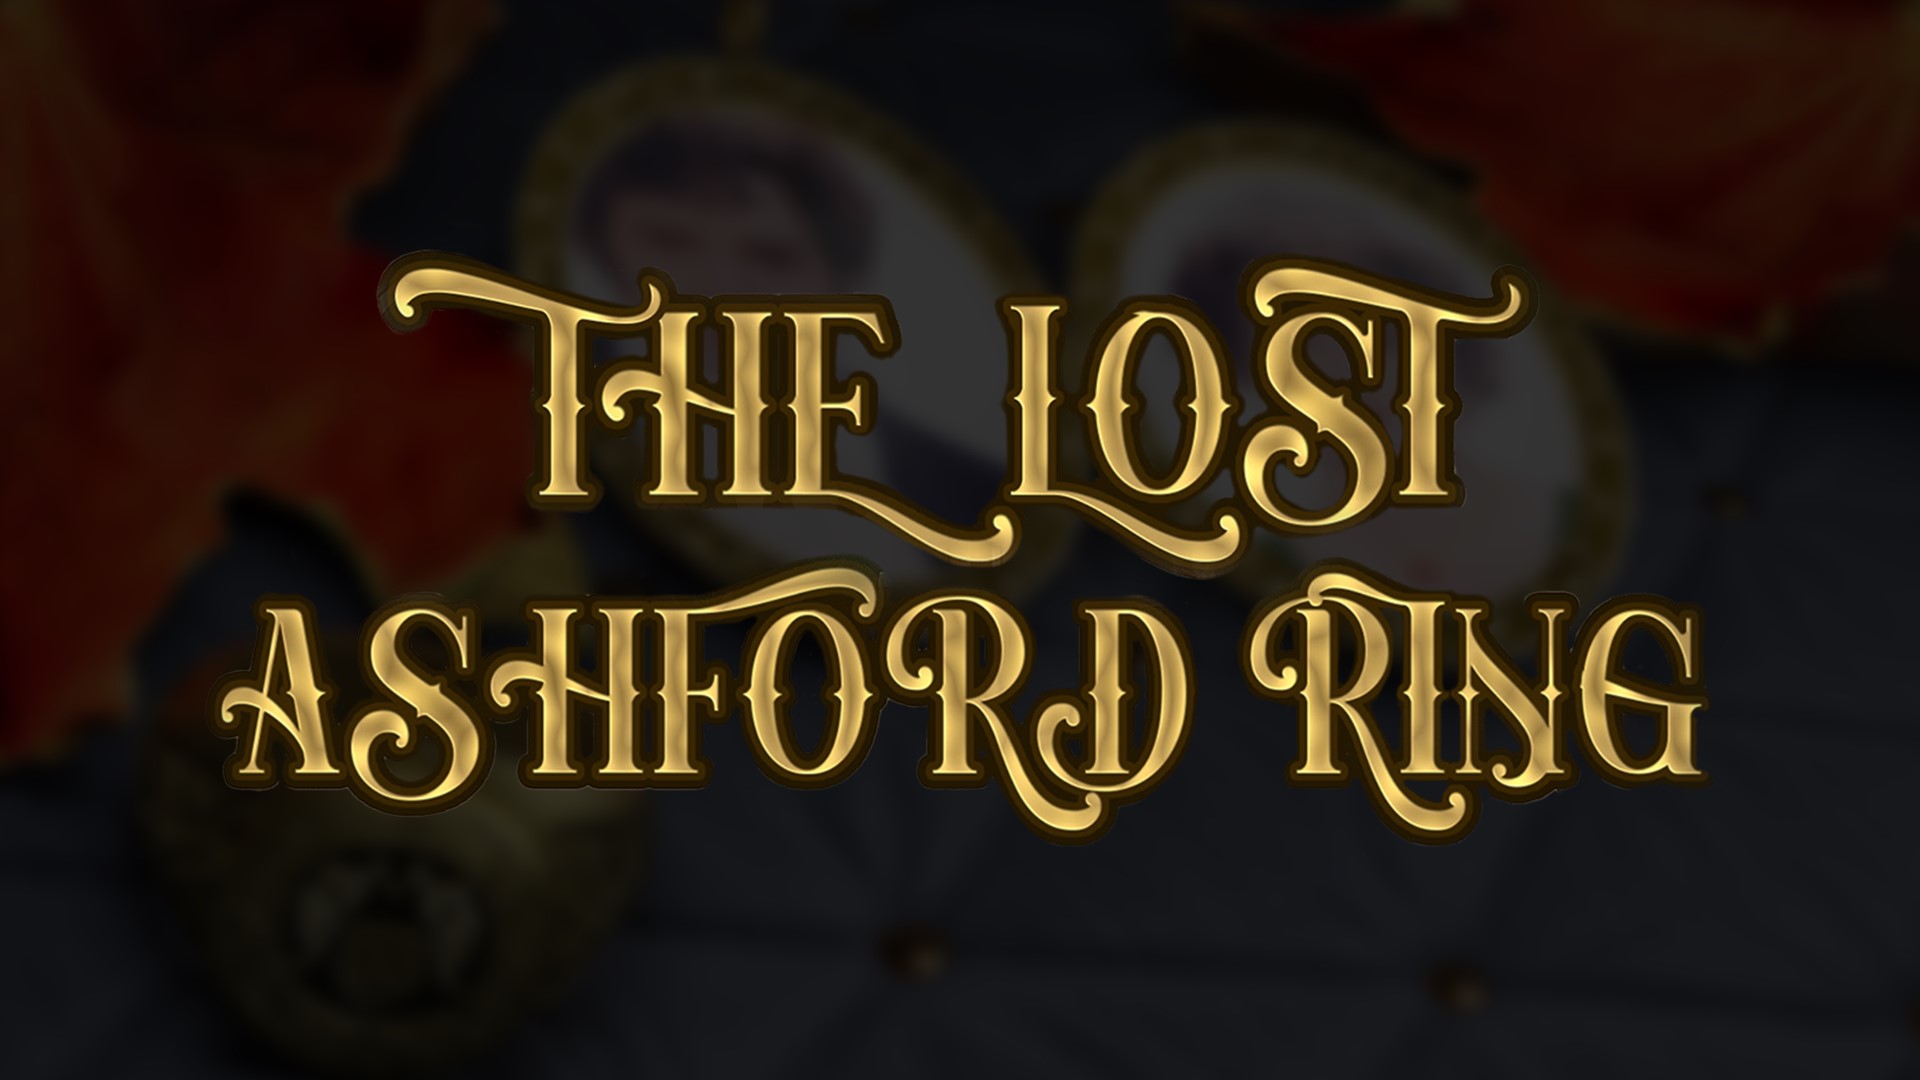 The Lost Ashford Ring